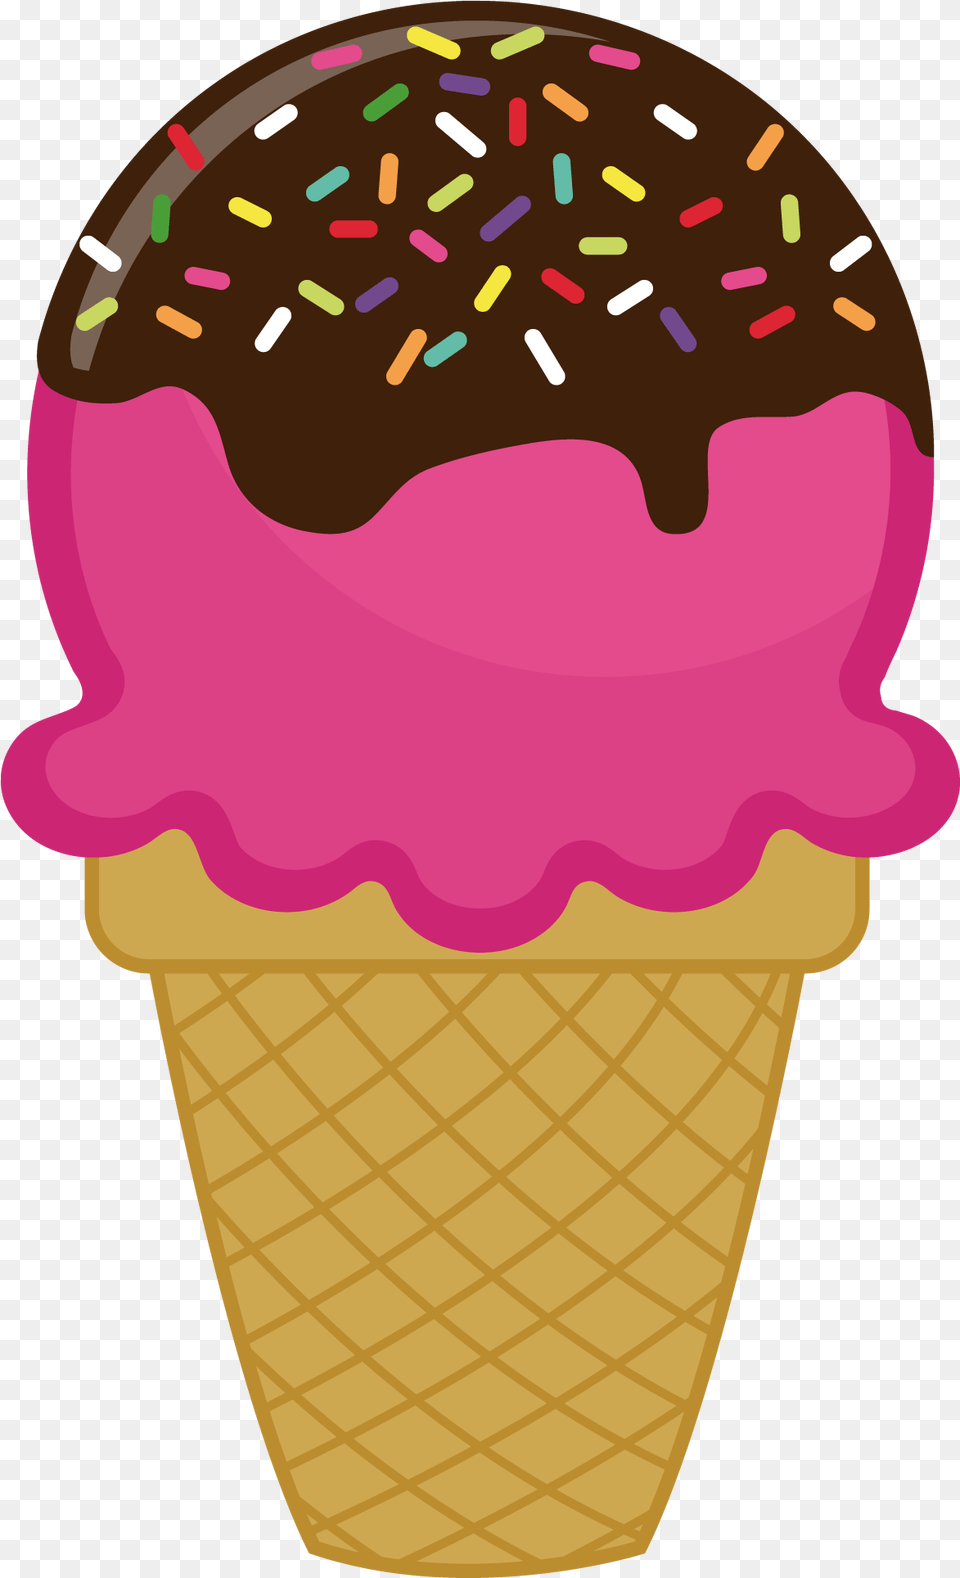 Cand Clipart Ice Cream Imagenes De Comida Chatarra Animadas, Dessert, Food, Ice Cream, Birthday Cake Free Png